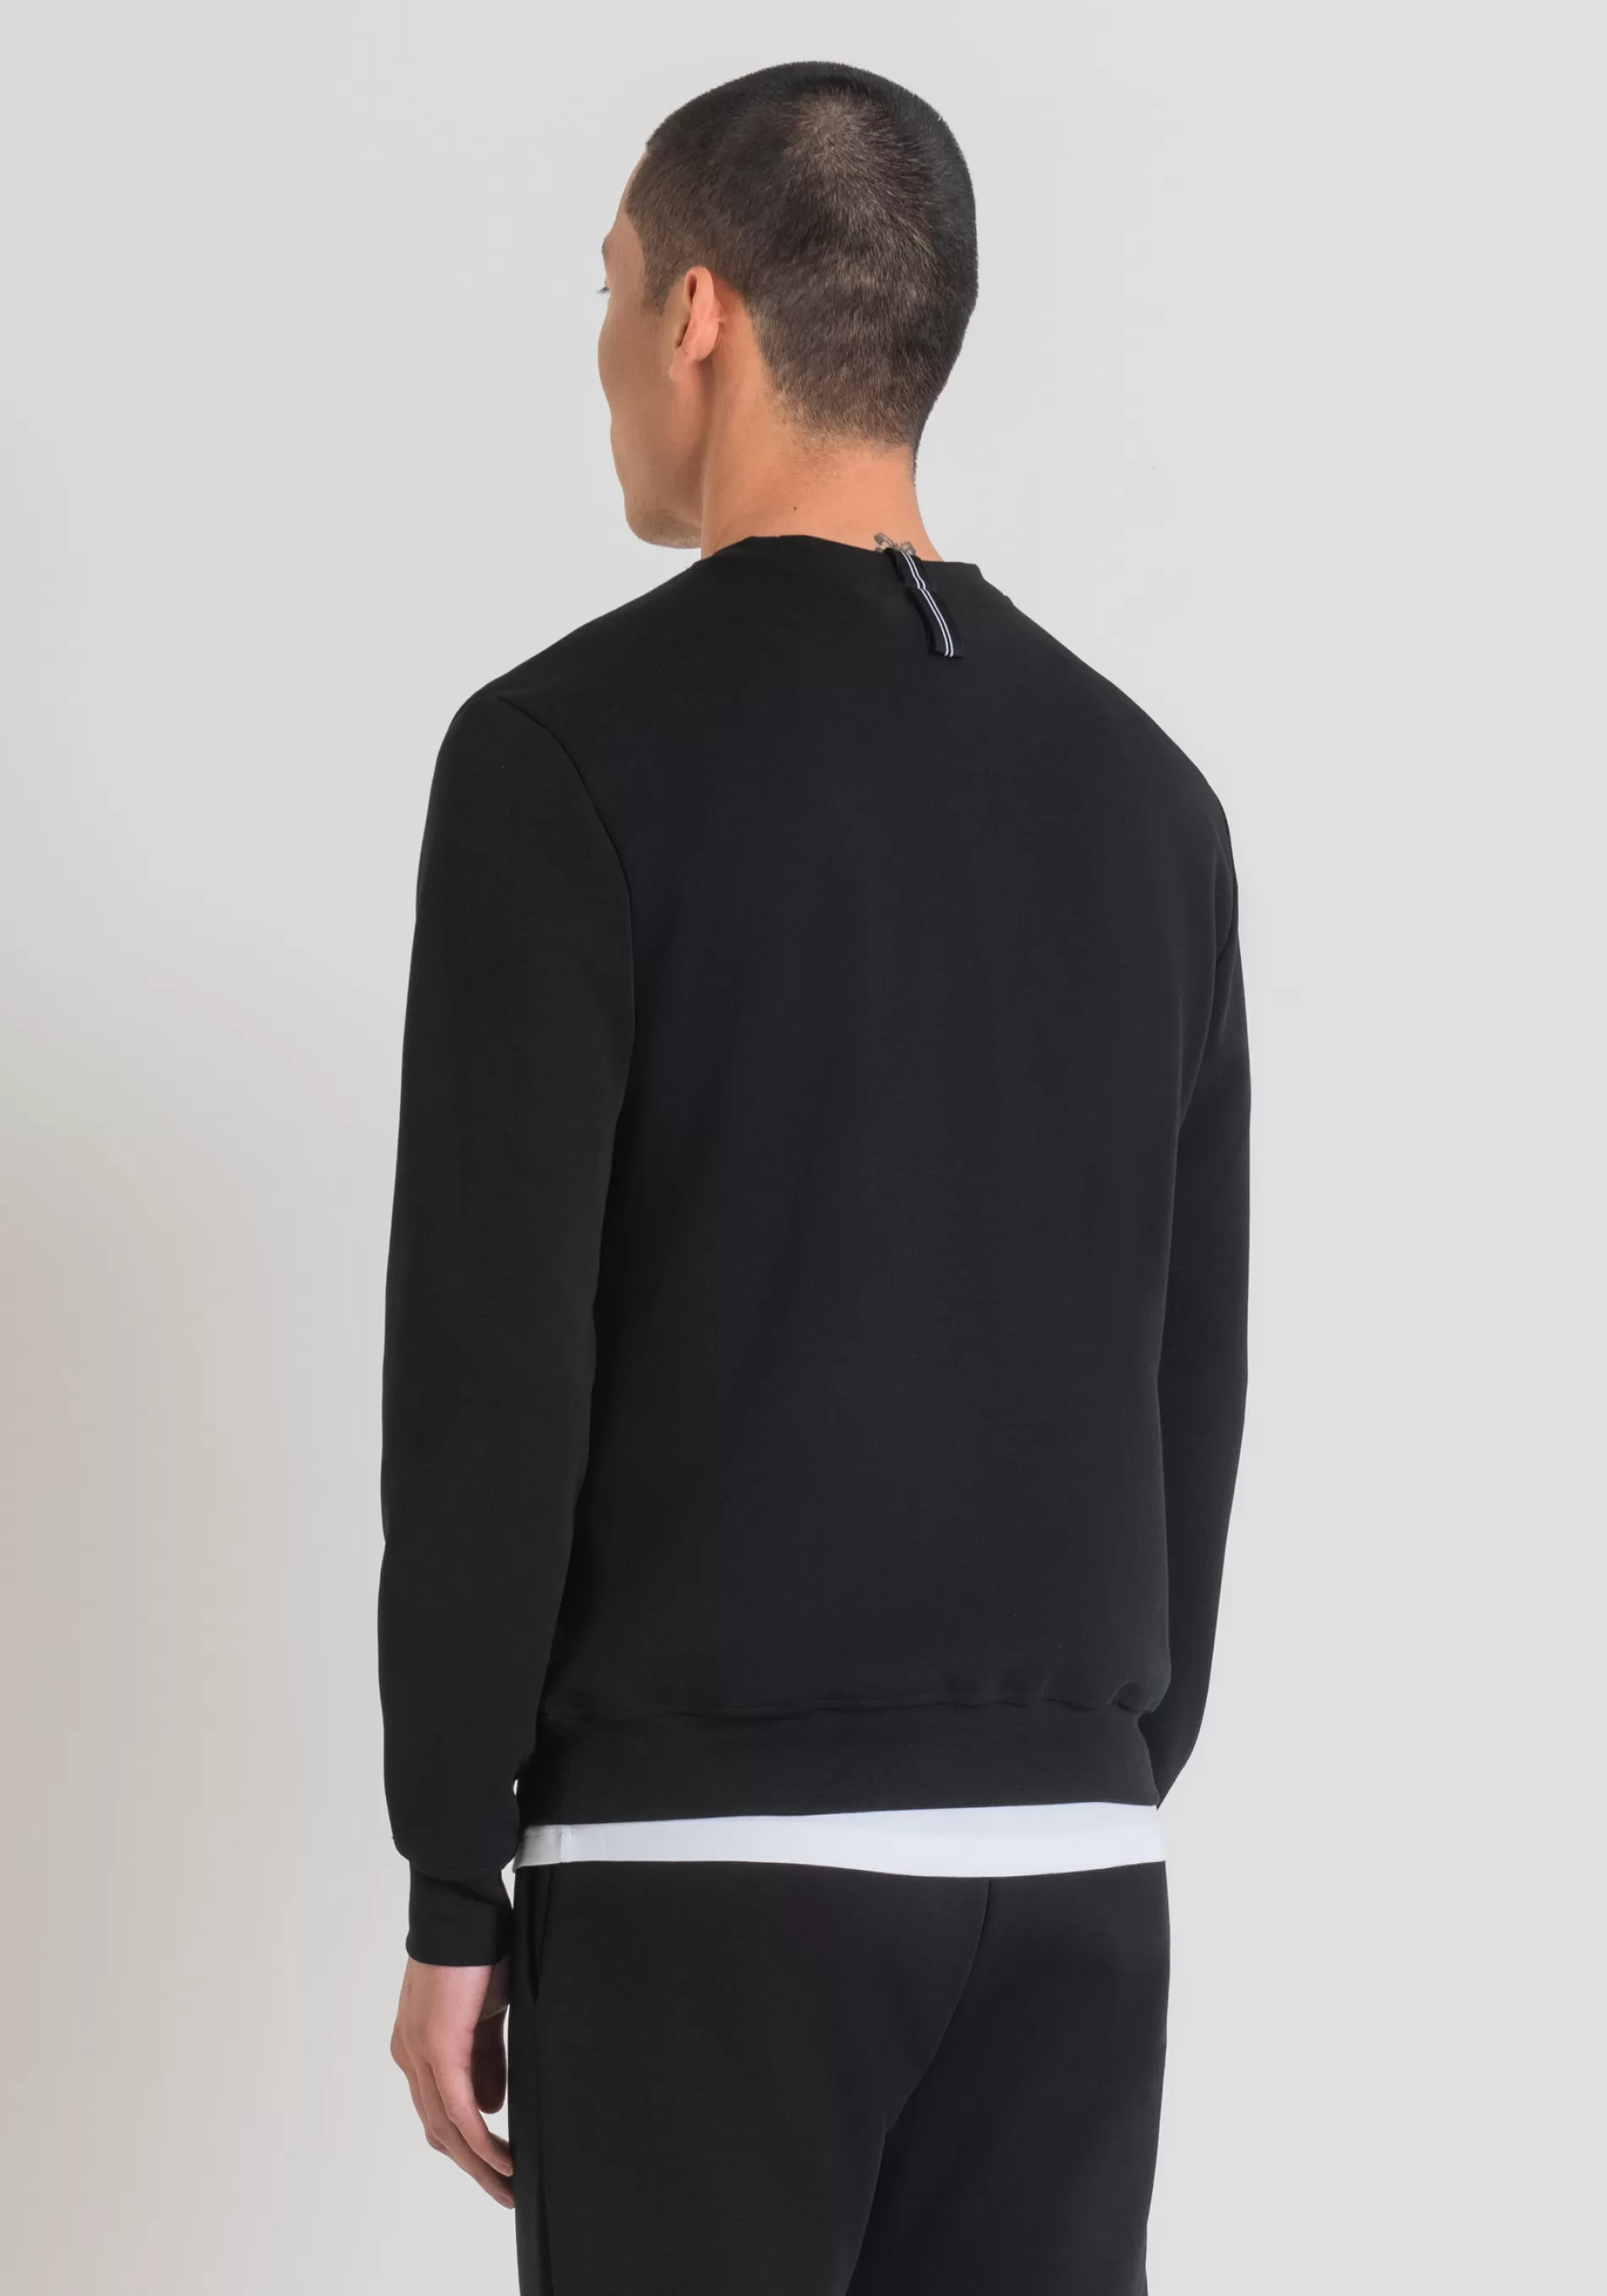 Hot SLIM FIT CREW-NECK SWEATSHIRT IN COTTON BLEND FABRIC WITH LOGO PLAQUE Sweatshirts